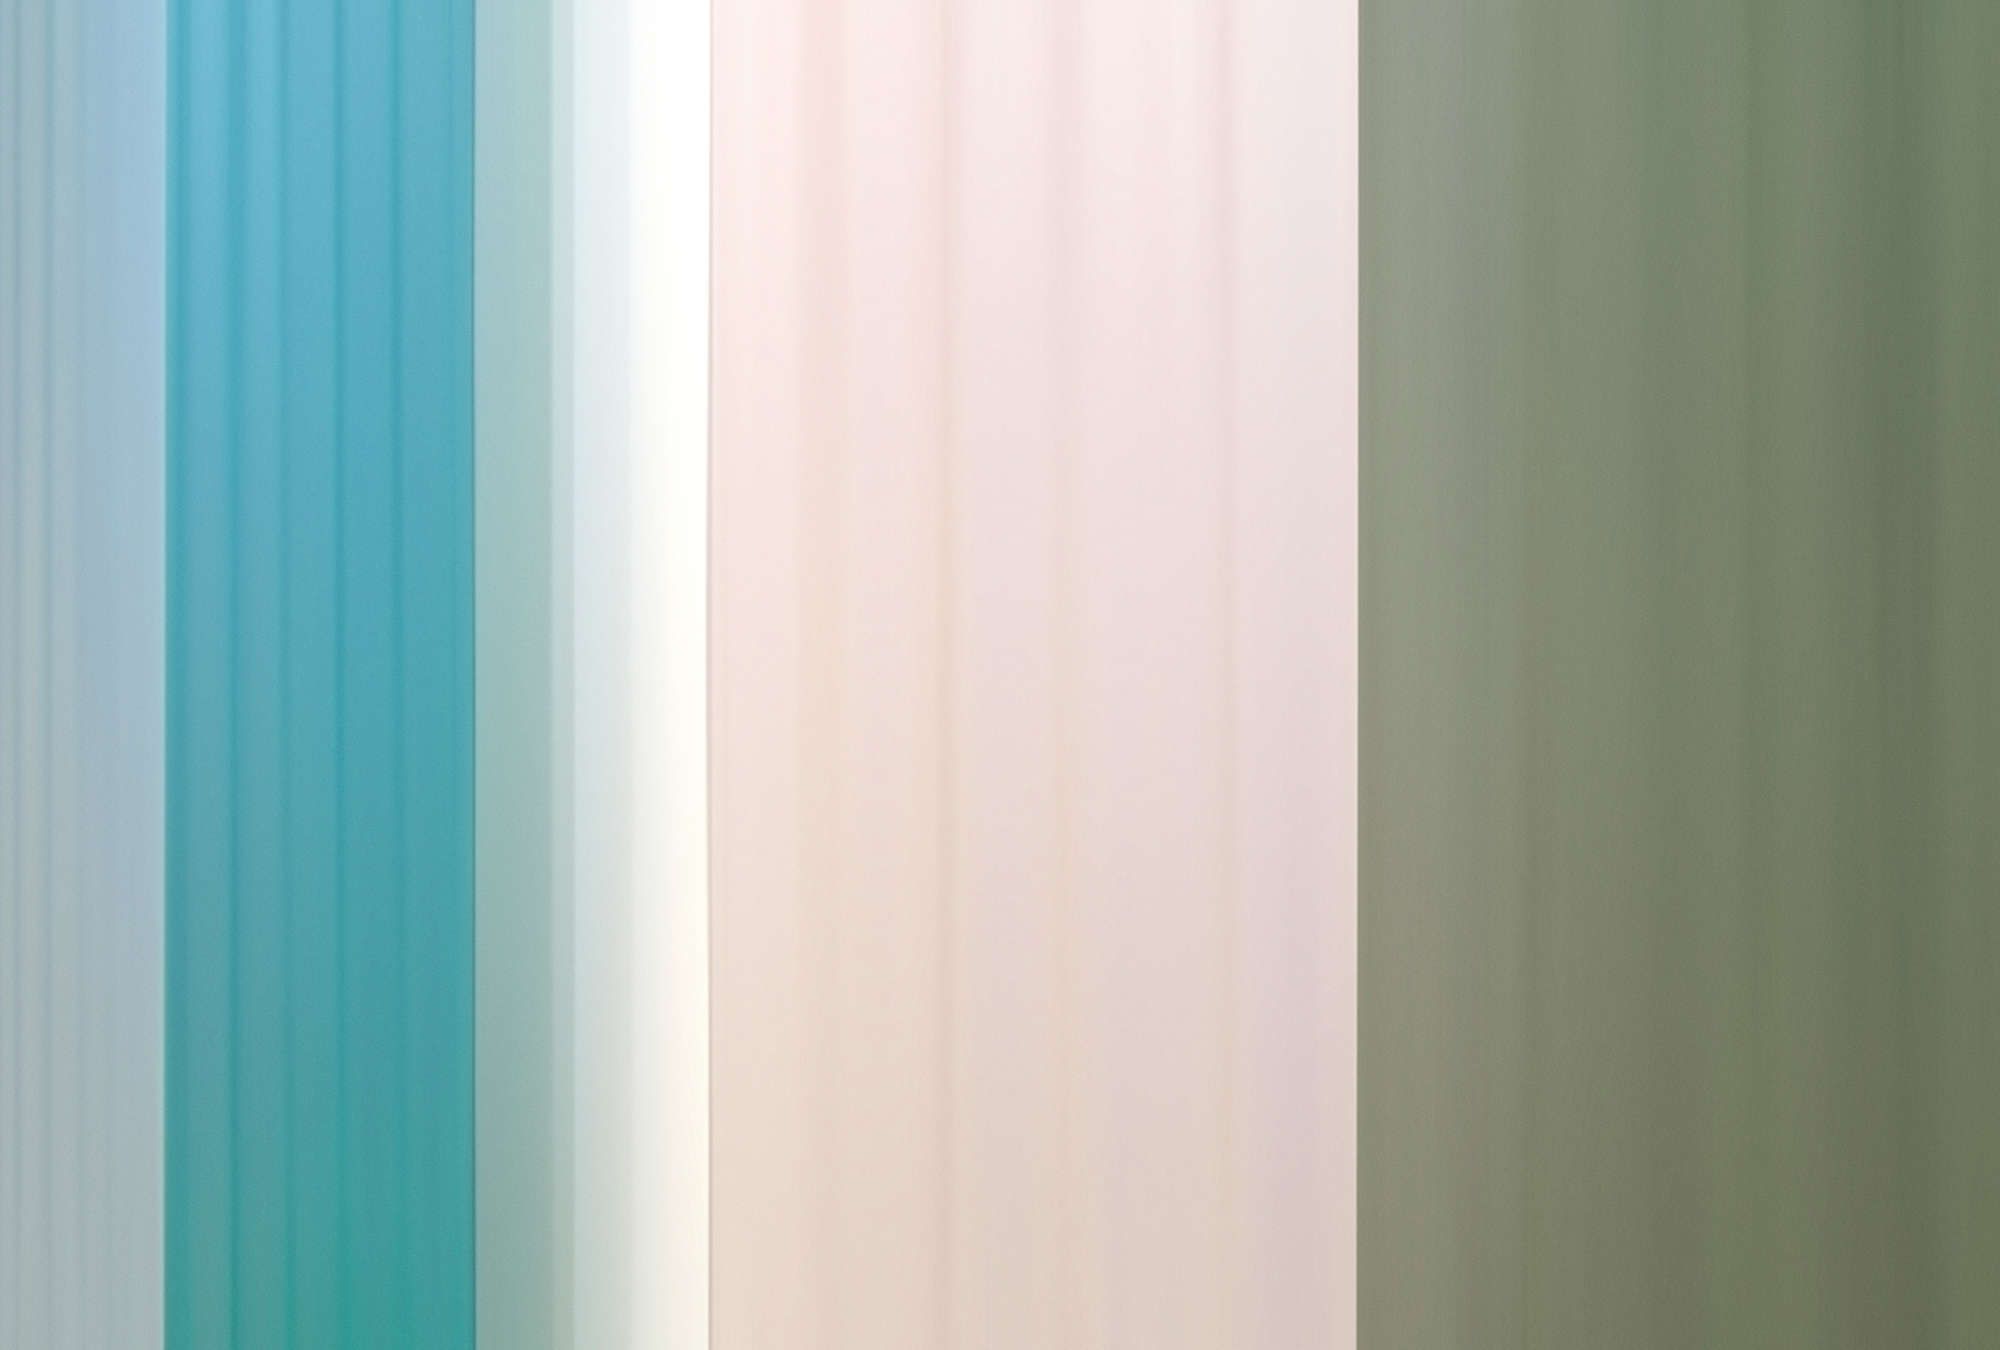             Photo wallpaper »co-coloures 4« - colour gradient with stripes - turquoise, cream, green | matt, smooth non-woven
        